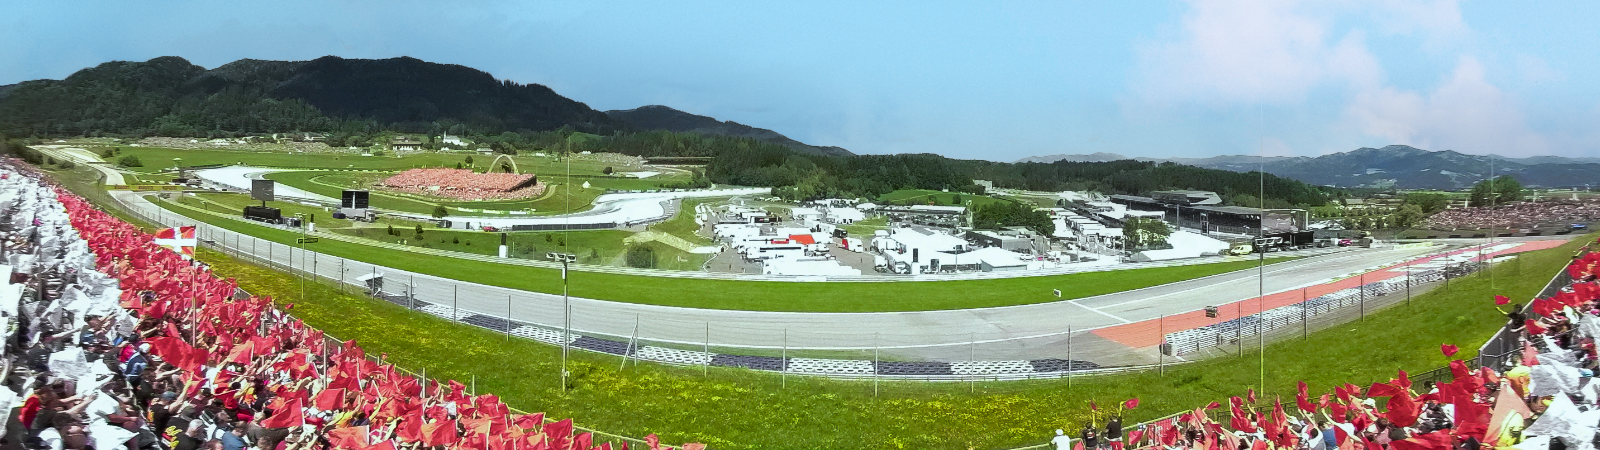 Vstupenka 3 Corner Start-Ziel | F1 Rakousko 2023 | Red Bull Ring | Spielberg | Oficilání vstupenky | www.F1austria.com